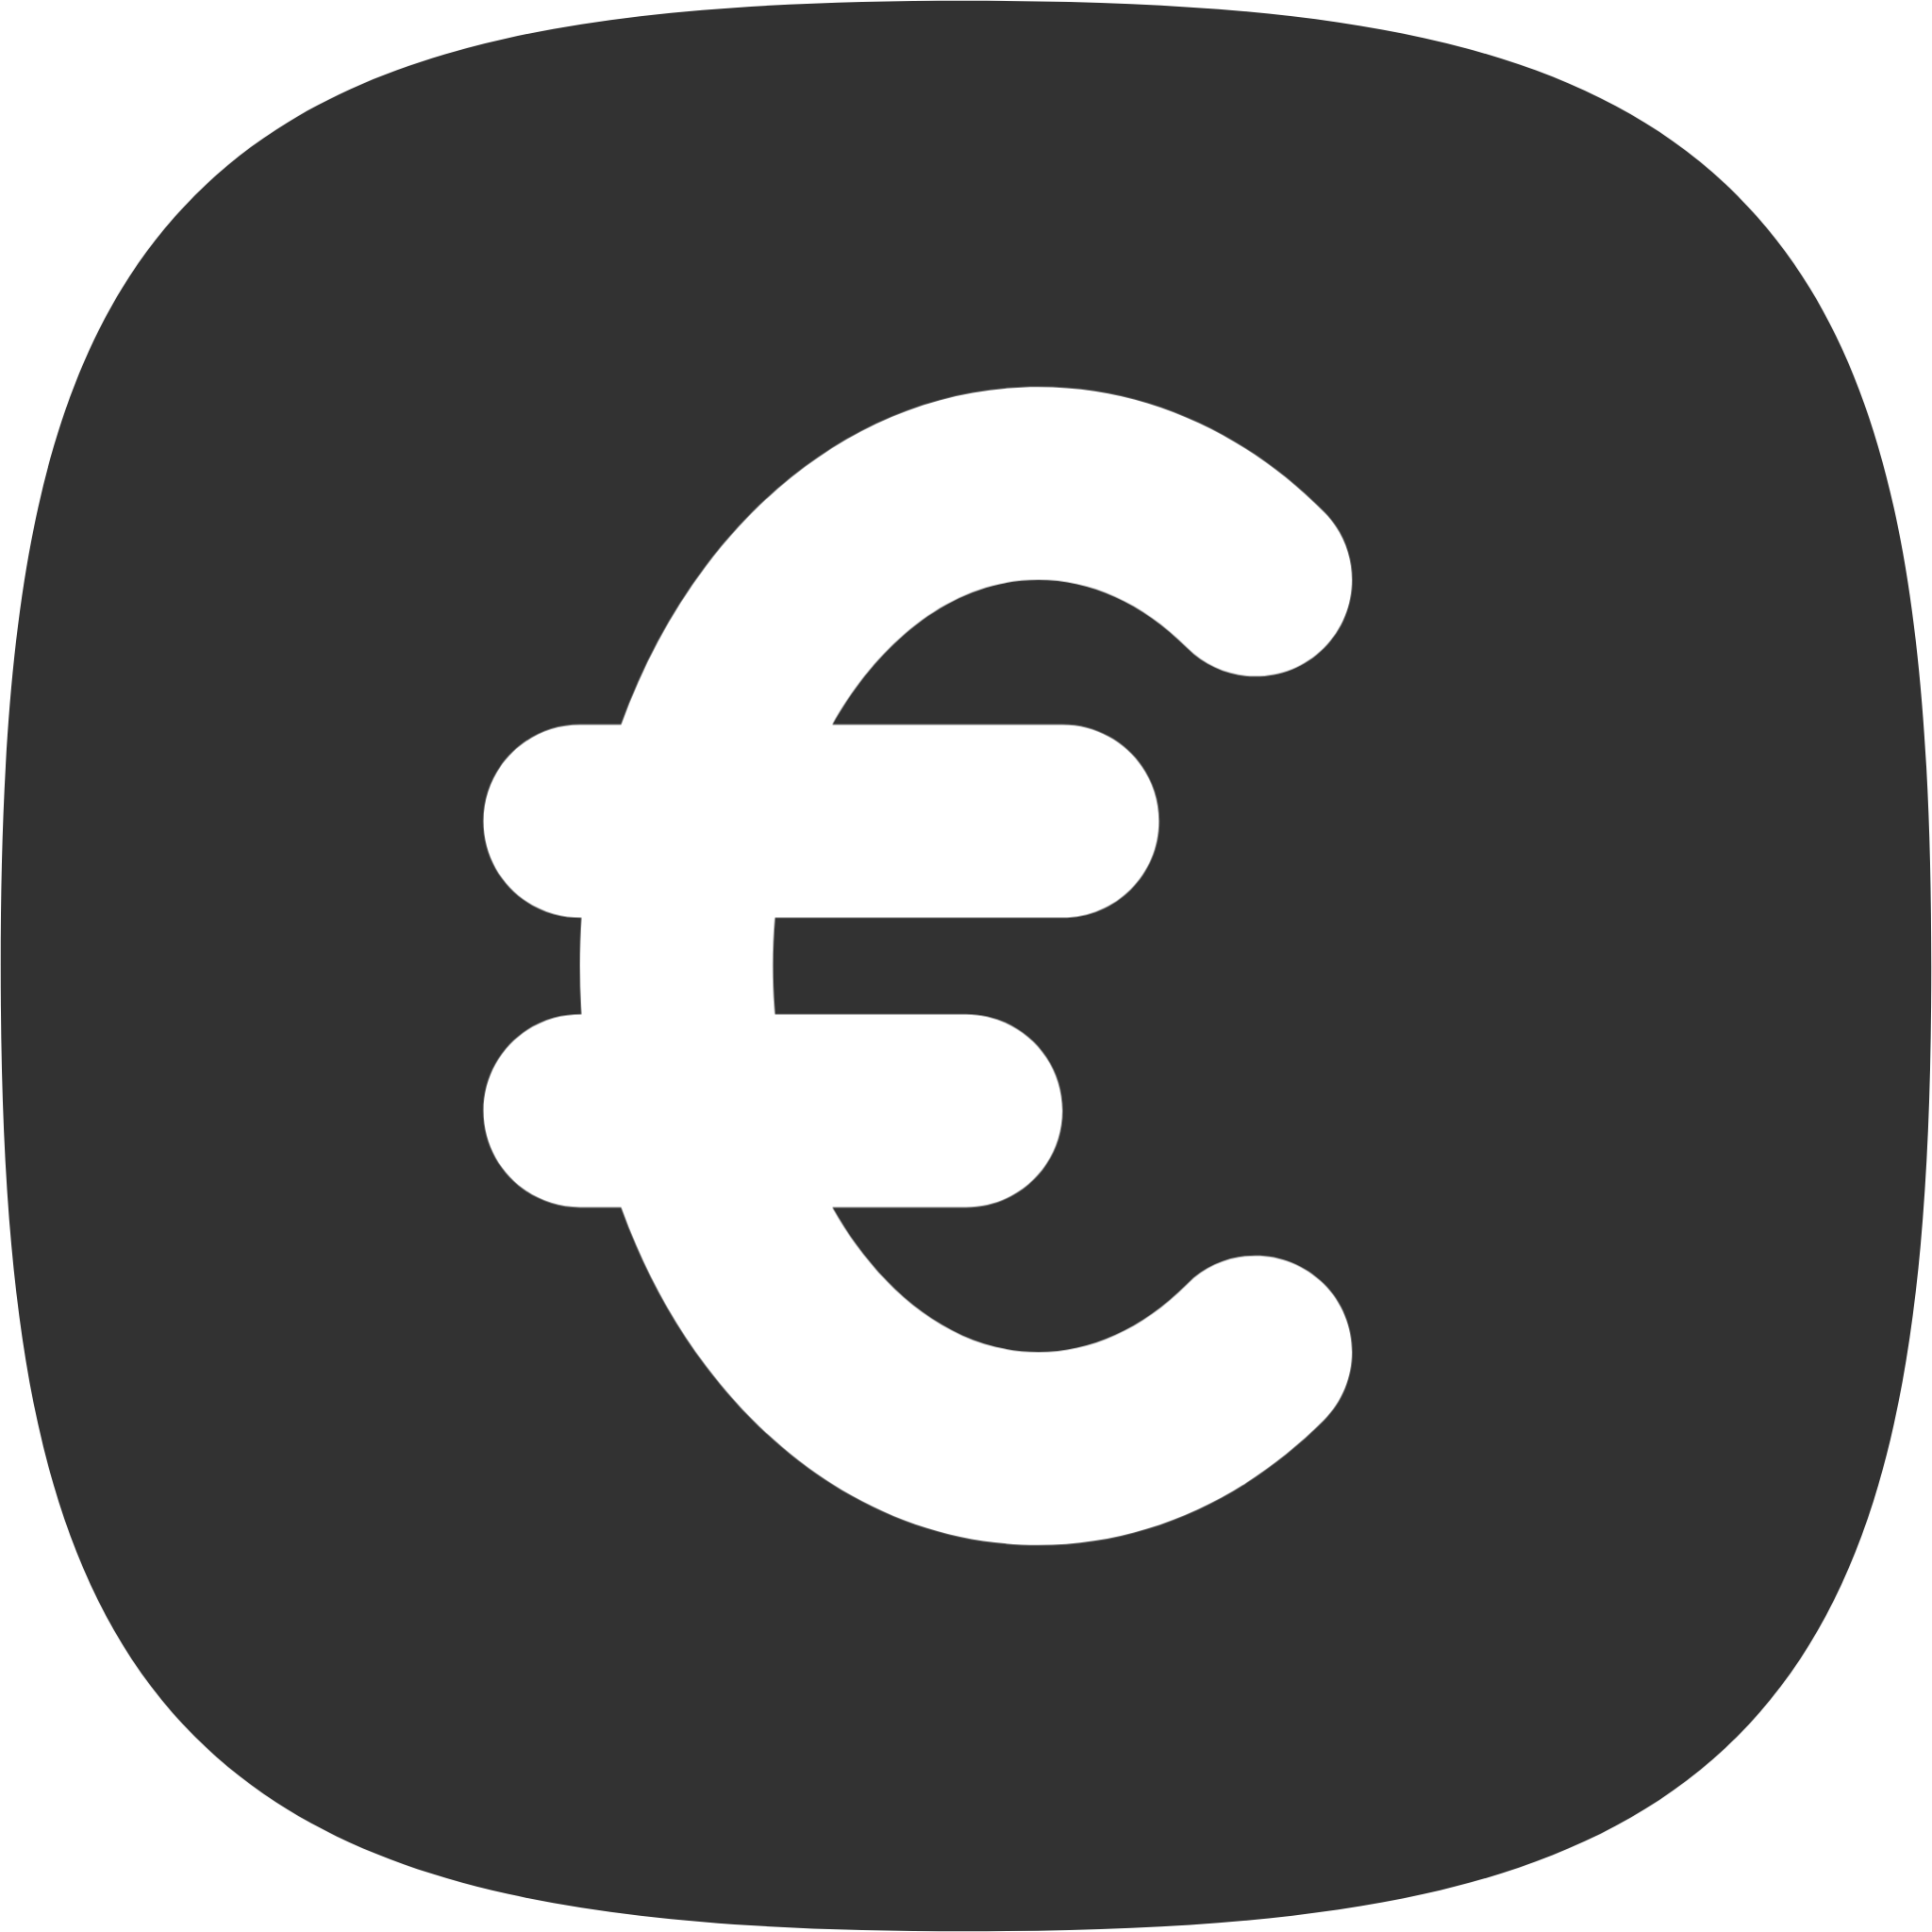 euro square icon